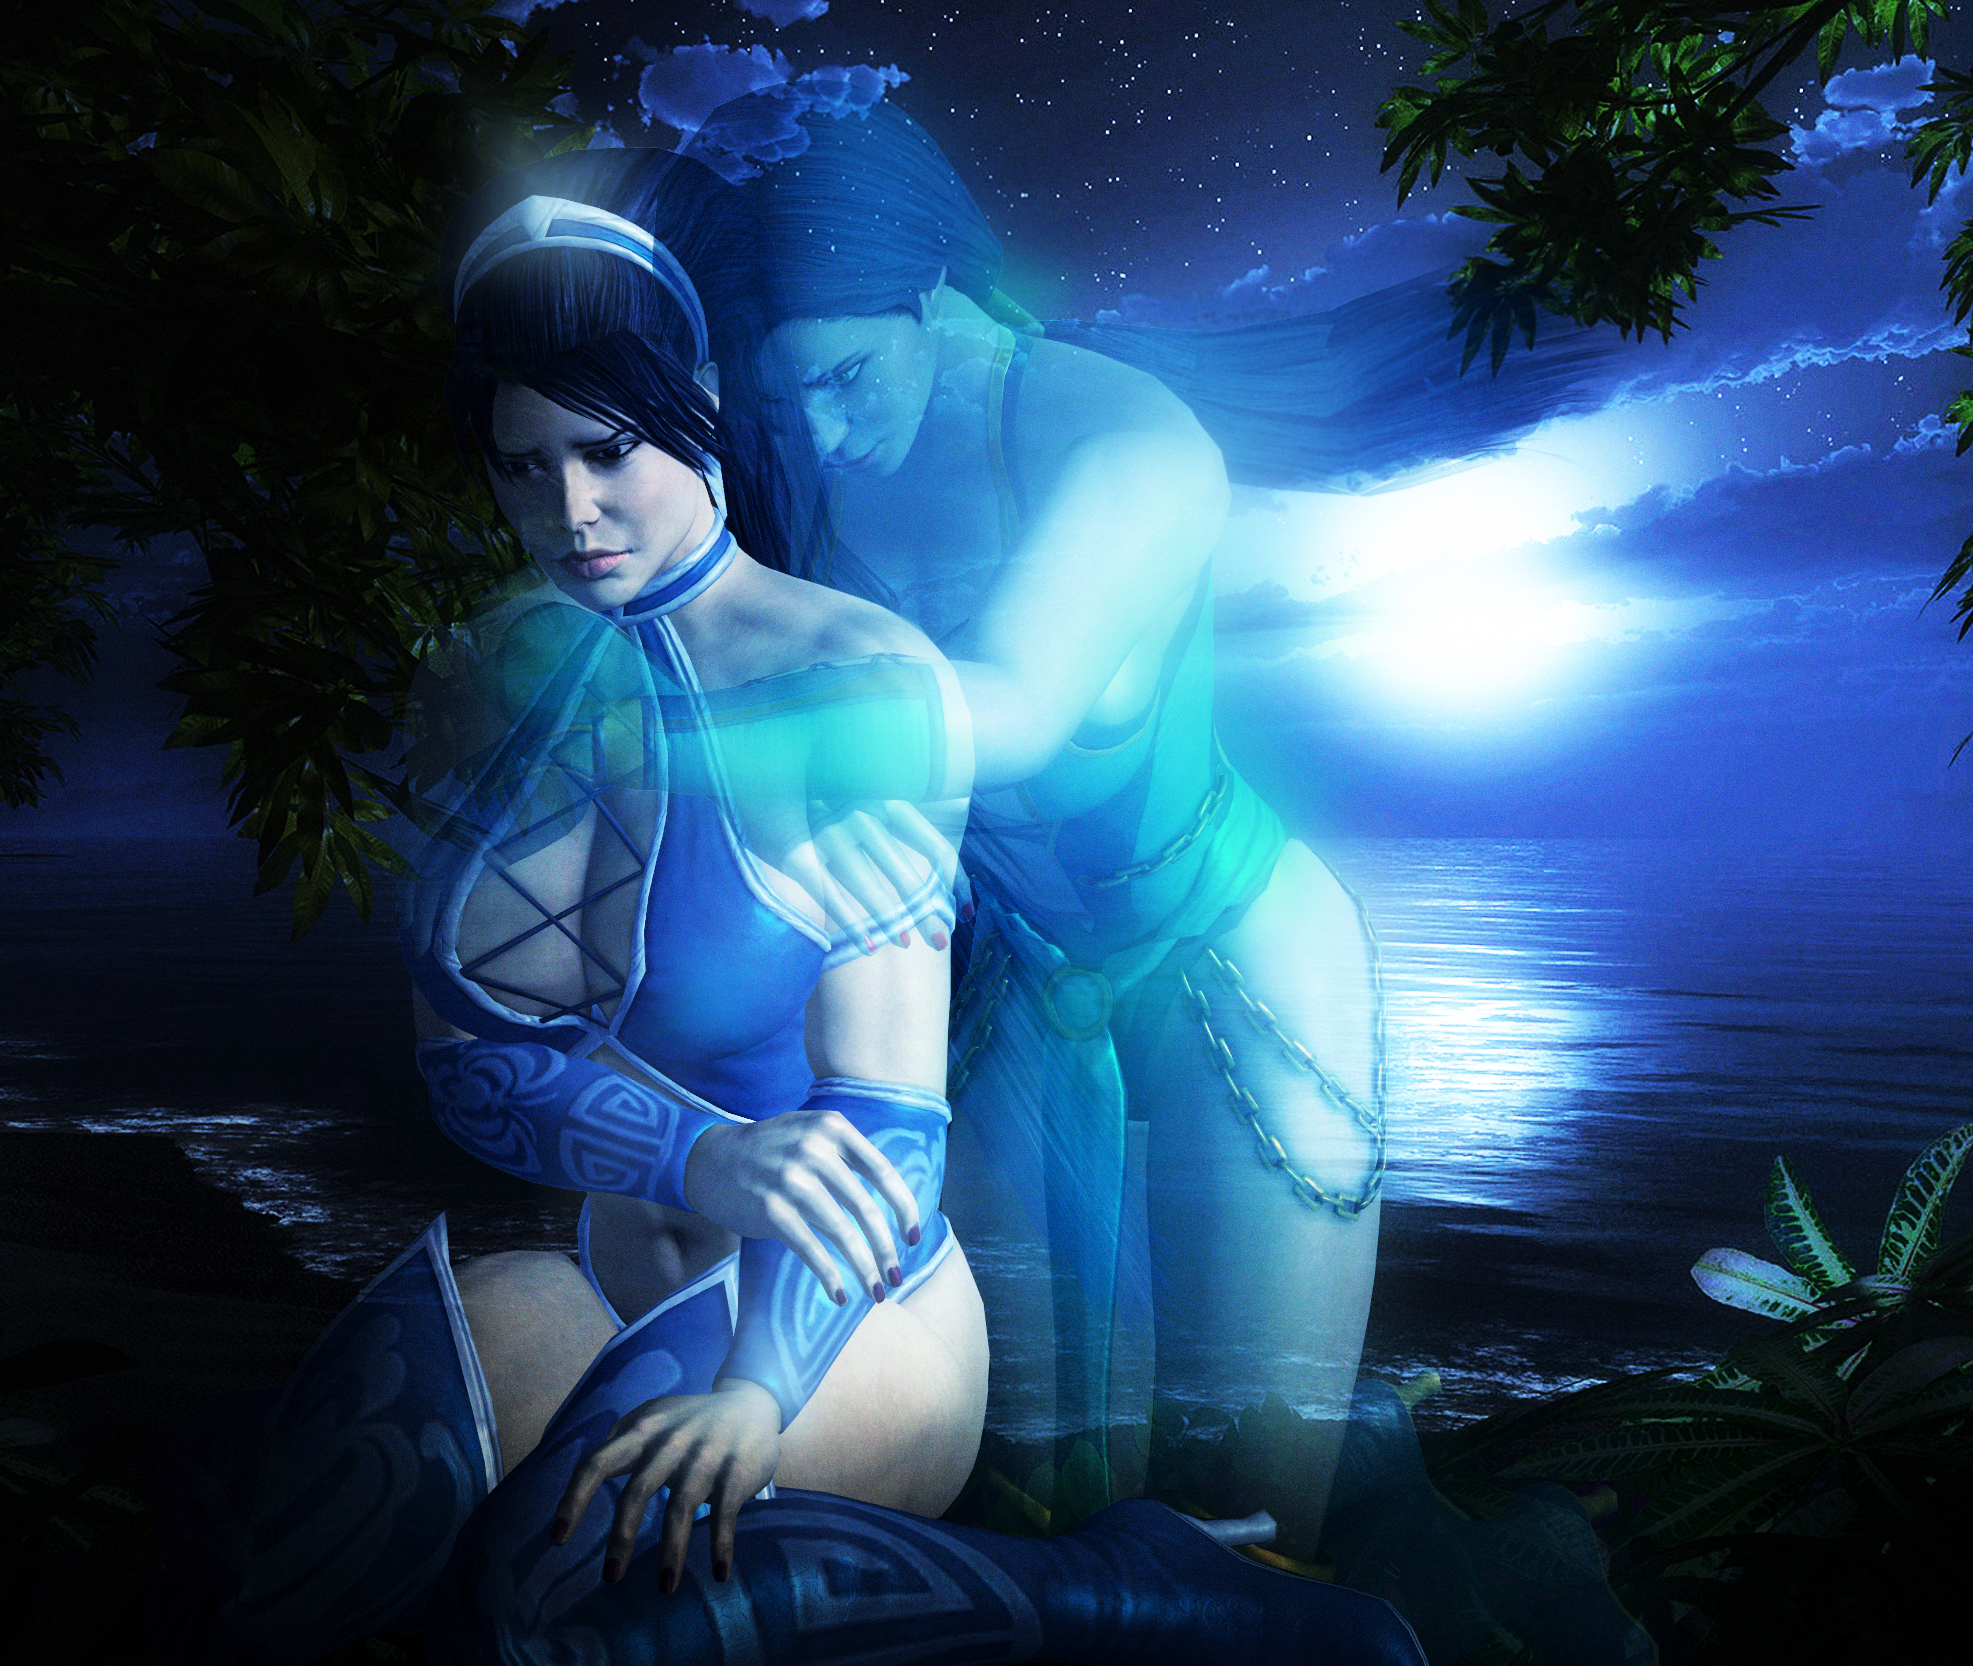 MK - Kitana and Jade - Mournful Night.